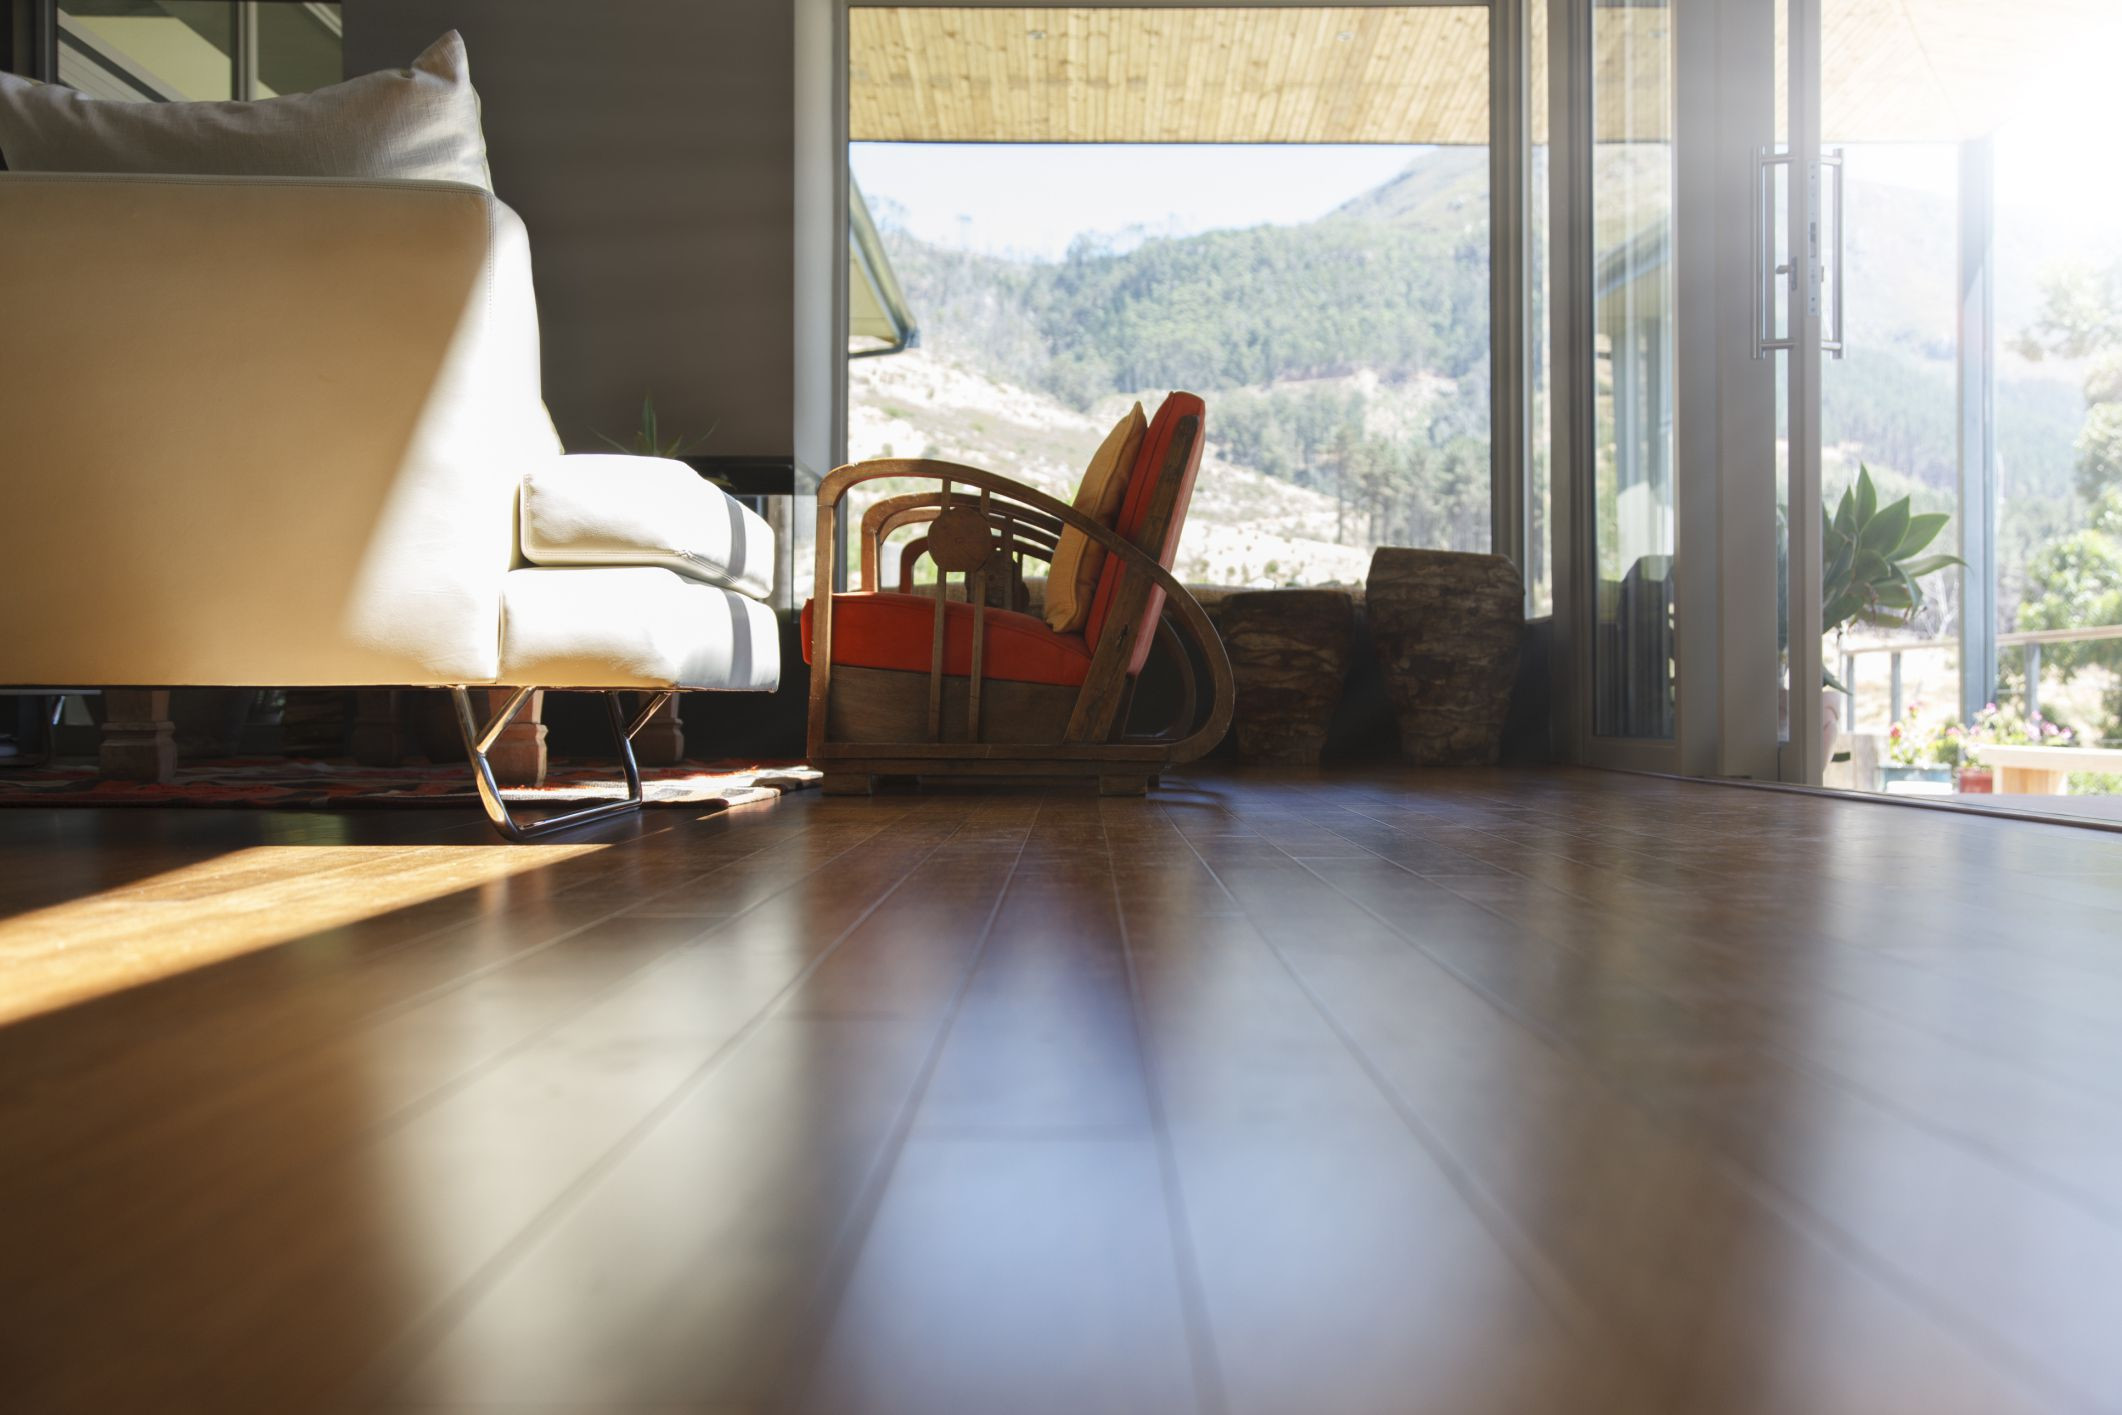 mohawk hardwood flooring oak cherry of pros and cons of bellawood flooring from lumber liquidators throughout exotic hardwood flooring 525439899 56a49d3a3df78cf77283453d